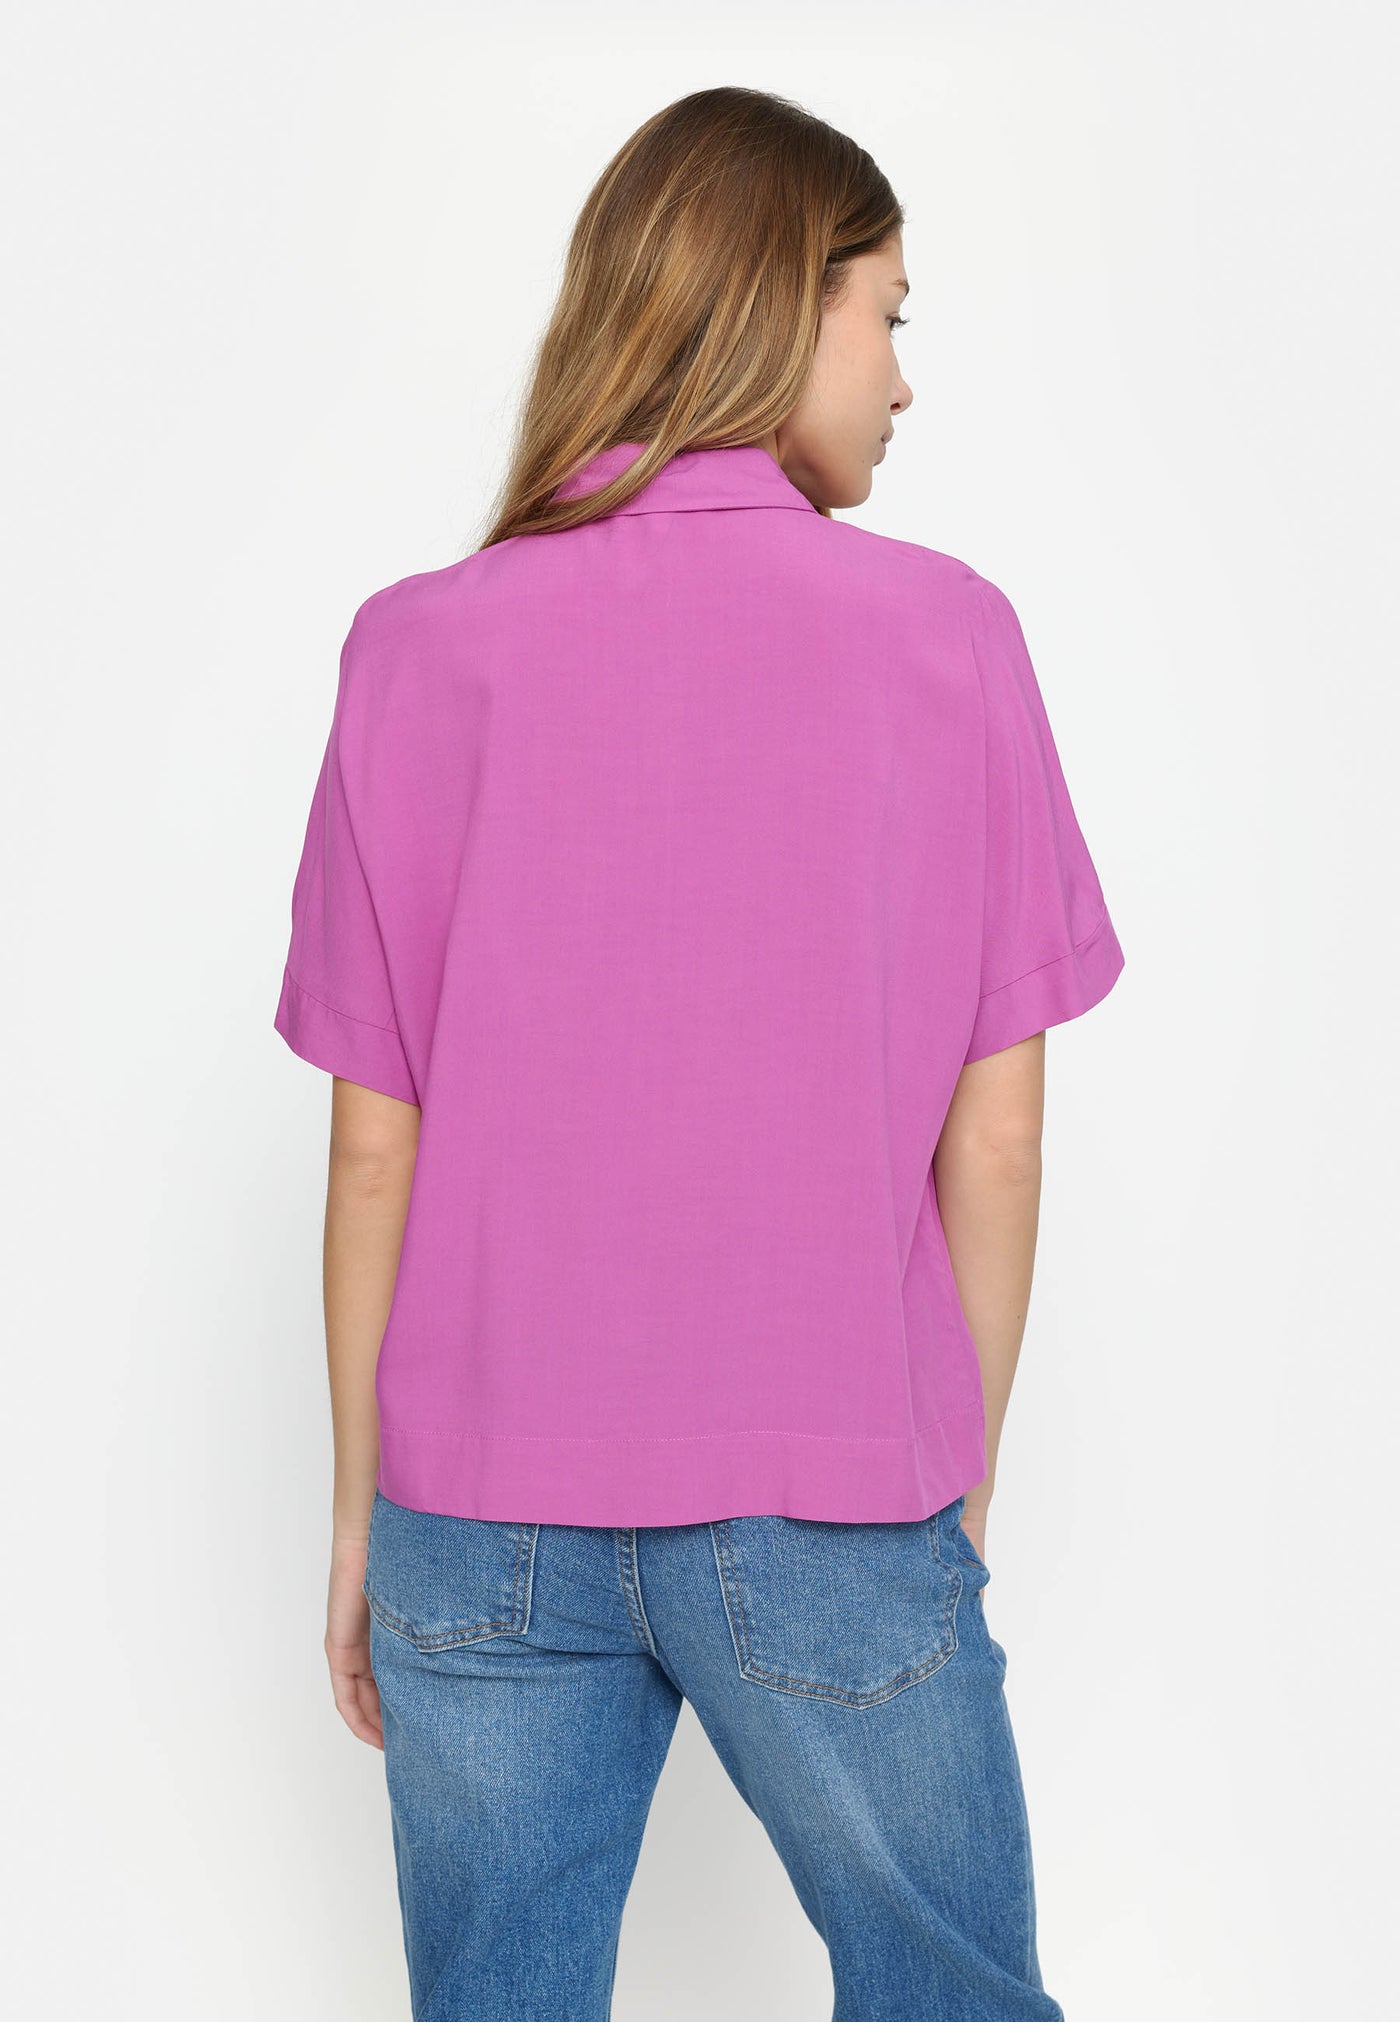 Soft Rebels SRFreedom SS shirt Shirts & Blouse 462 Purple Orchid